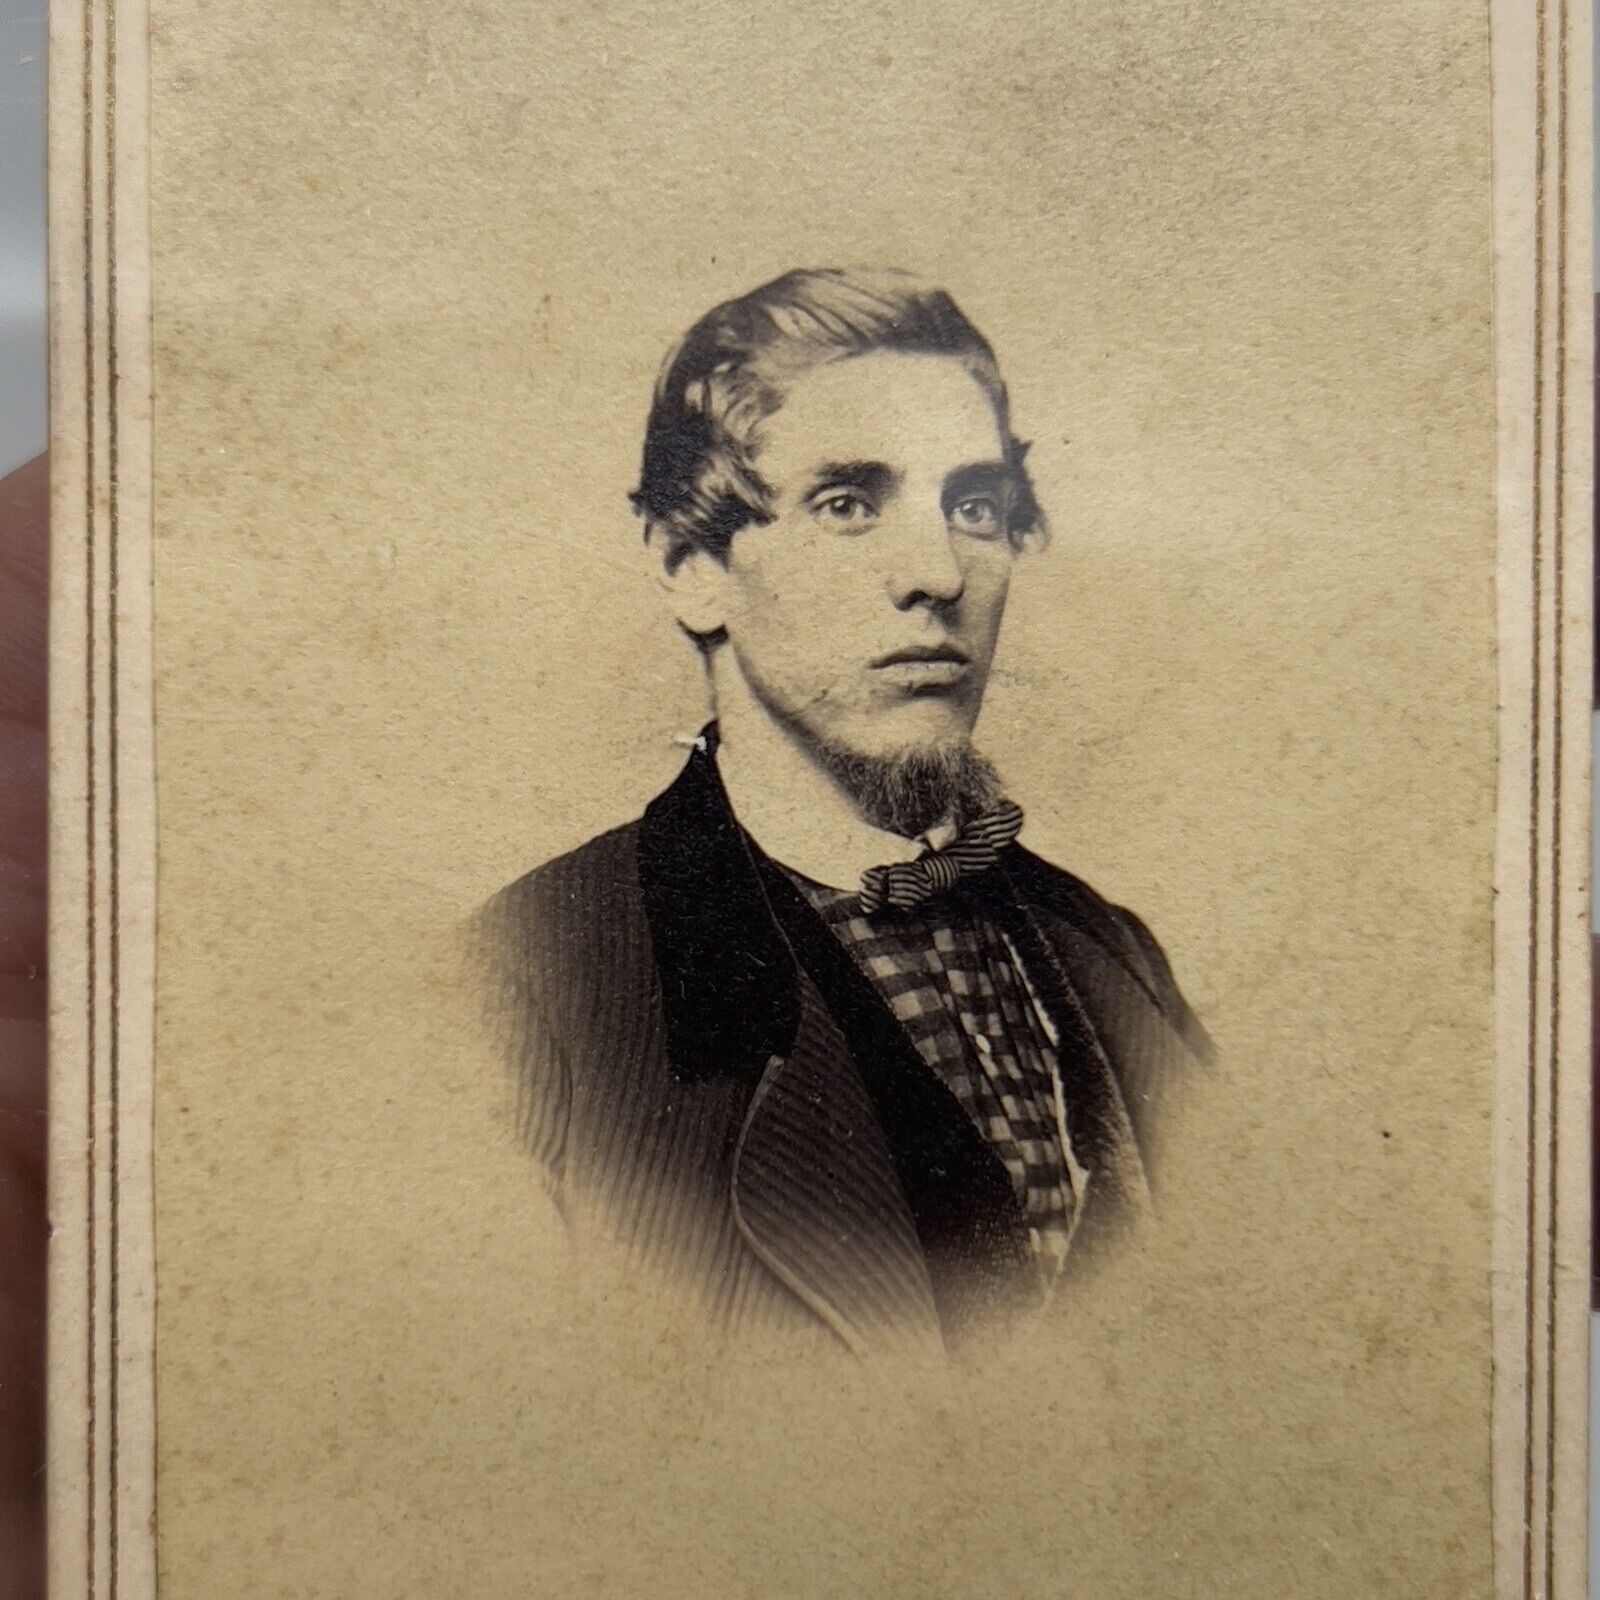 Antique CDV Photograph Charming Man - Chin Beard - Civil War Era - EASTON PA